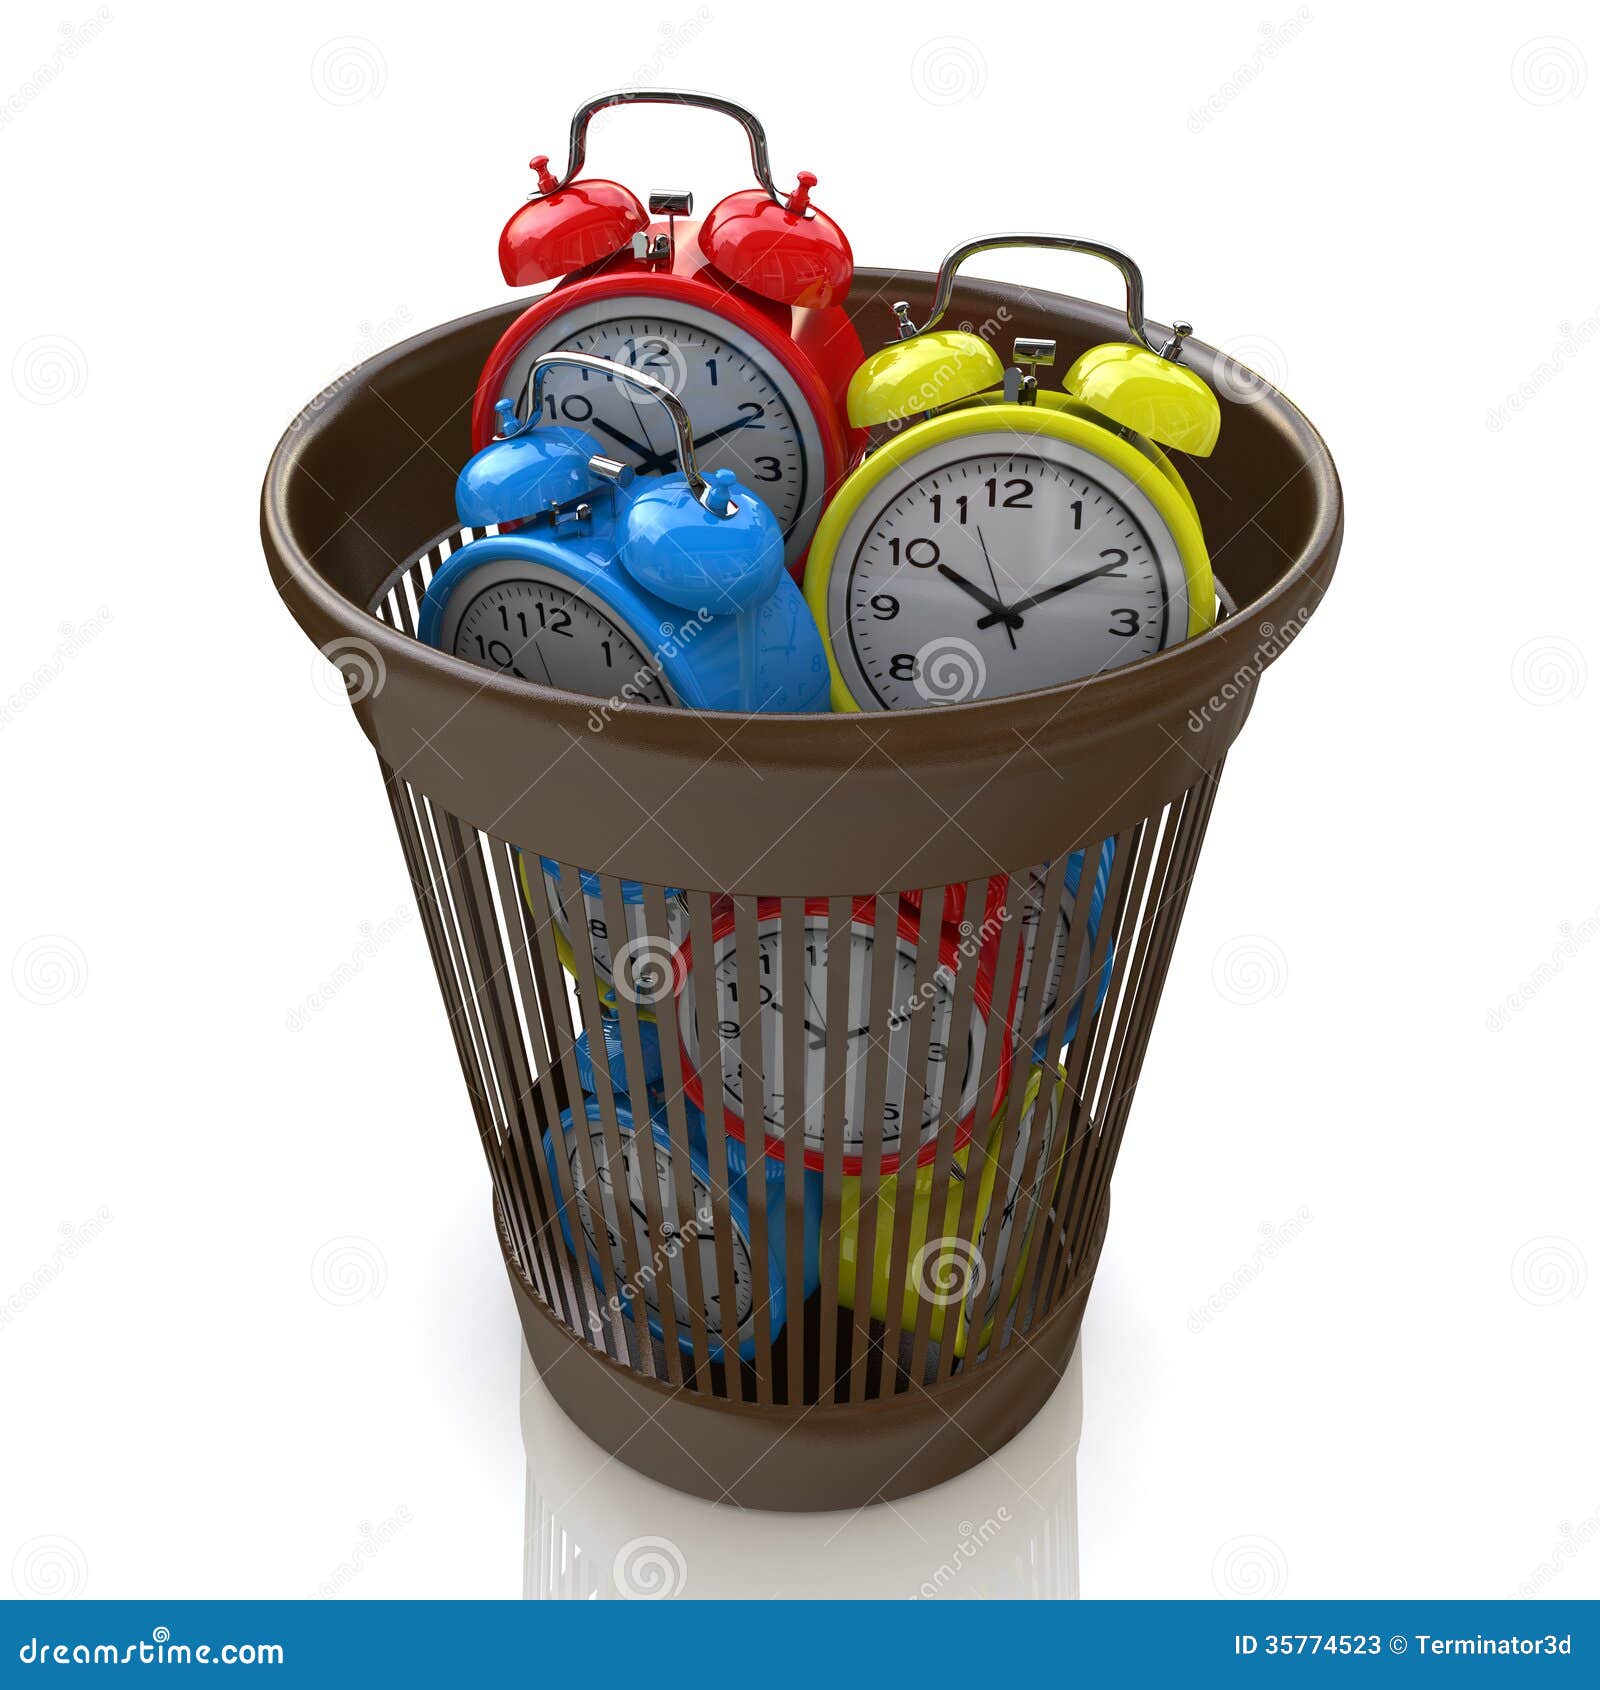 wasting-time-concept-alarm-clocks-trash-bin-design-information-related-to-loss-35774523.jpg